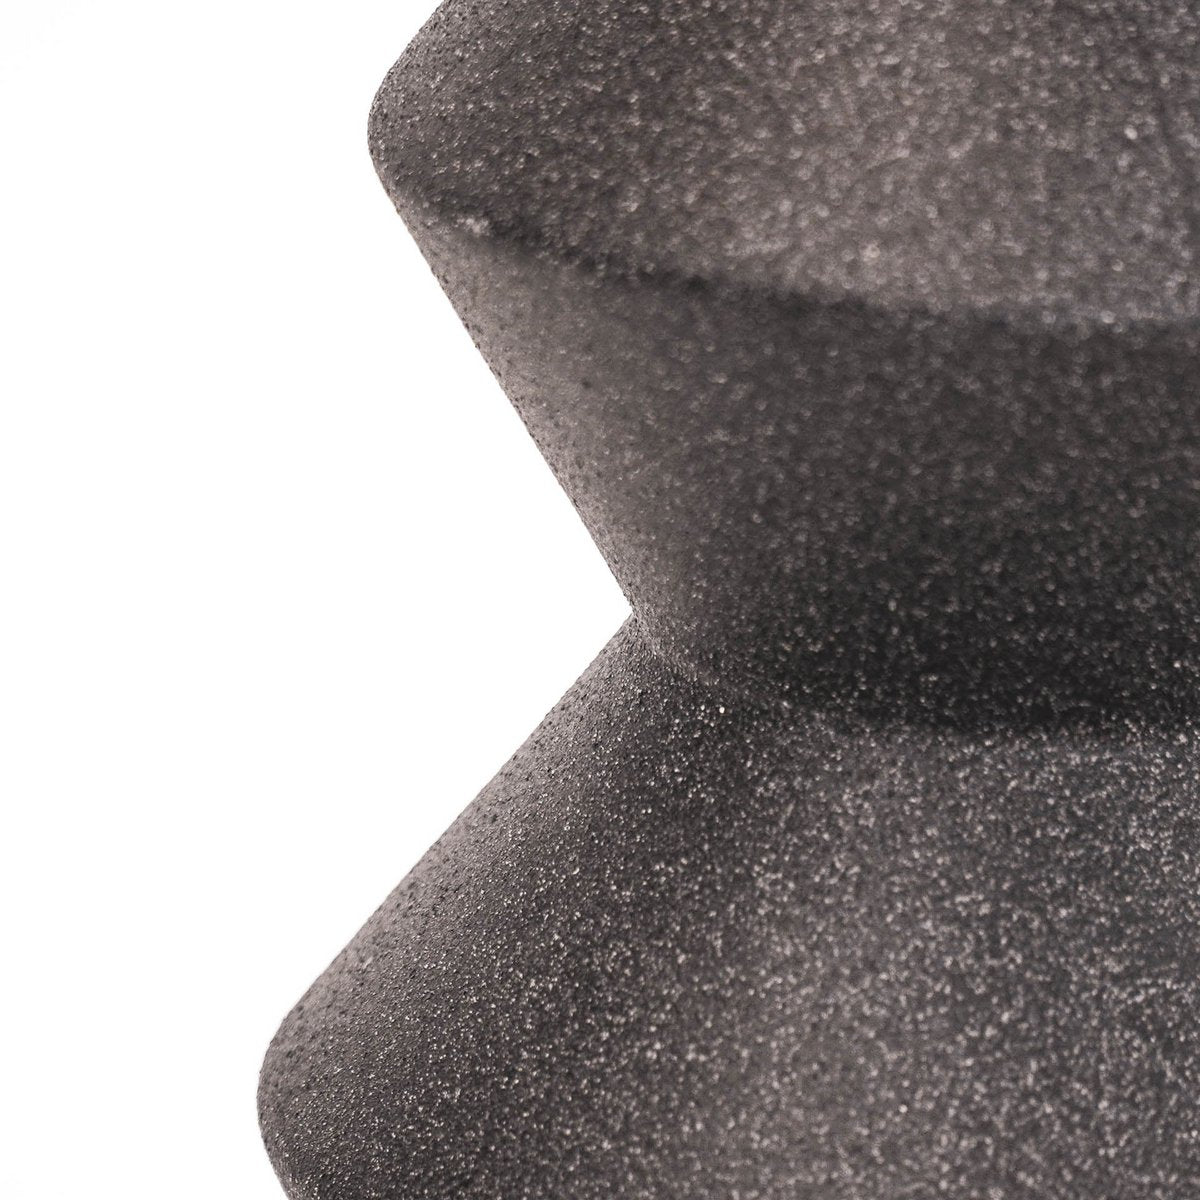 HV Organic Shape Vase - Black-13x13x22